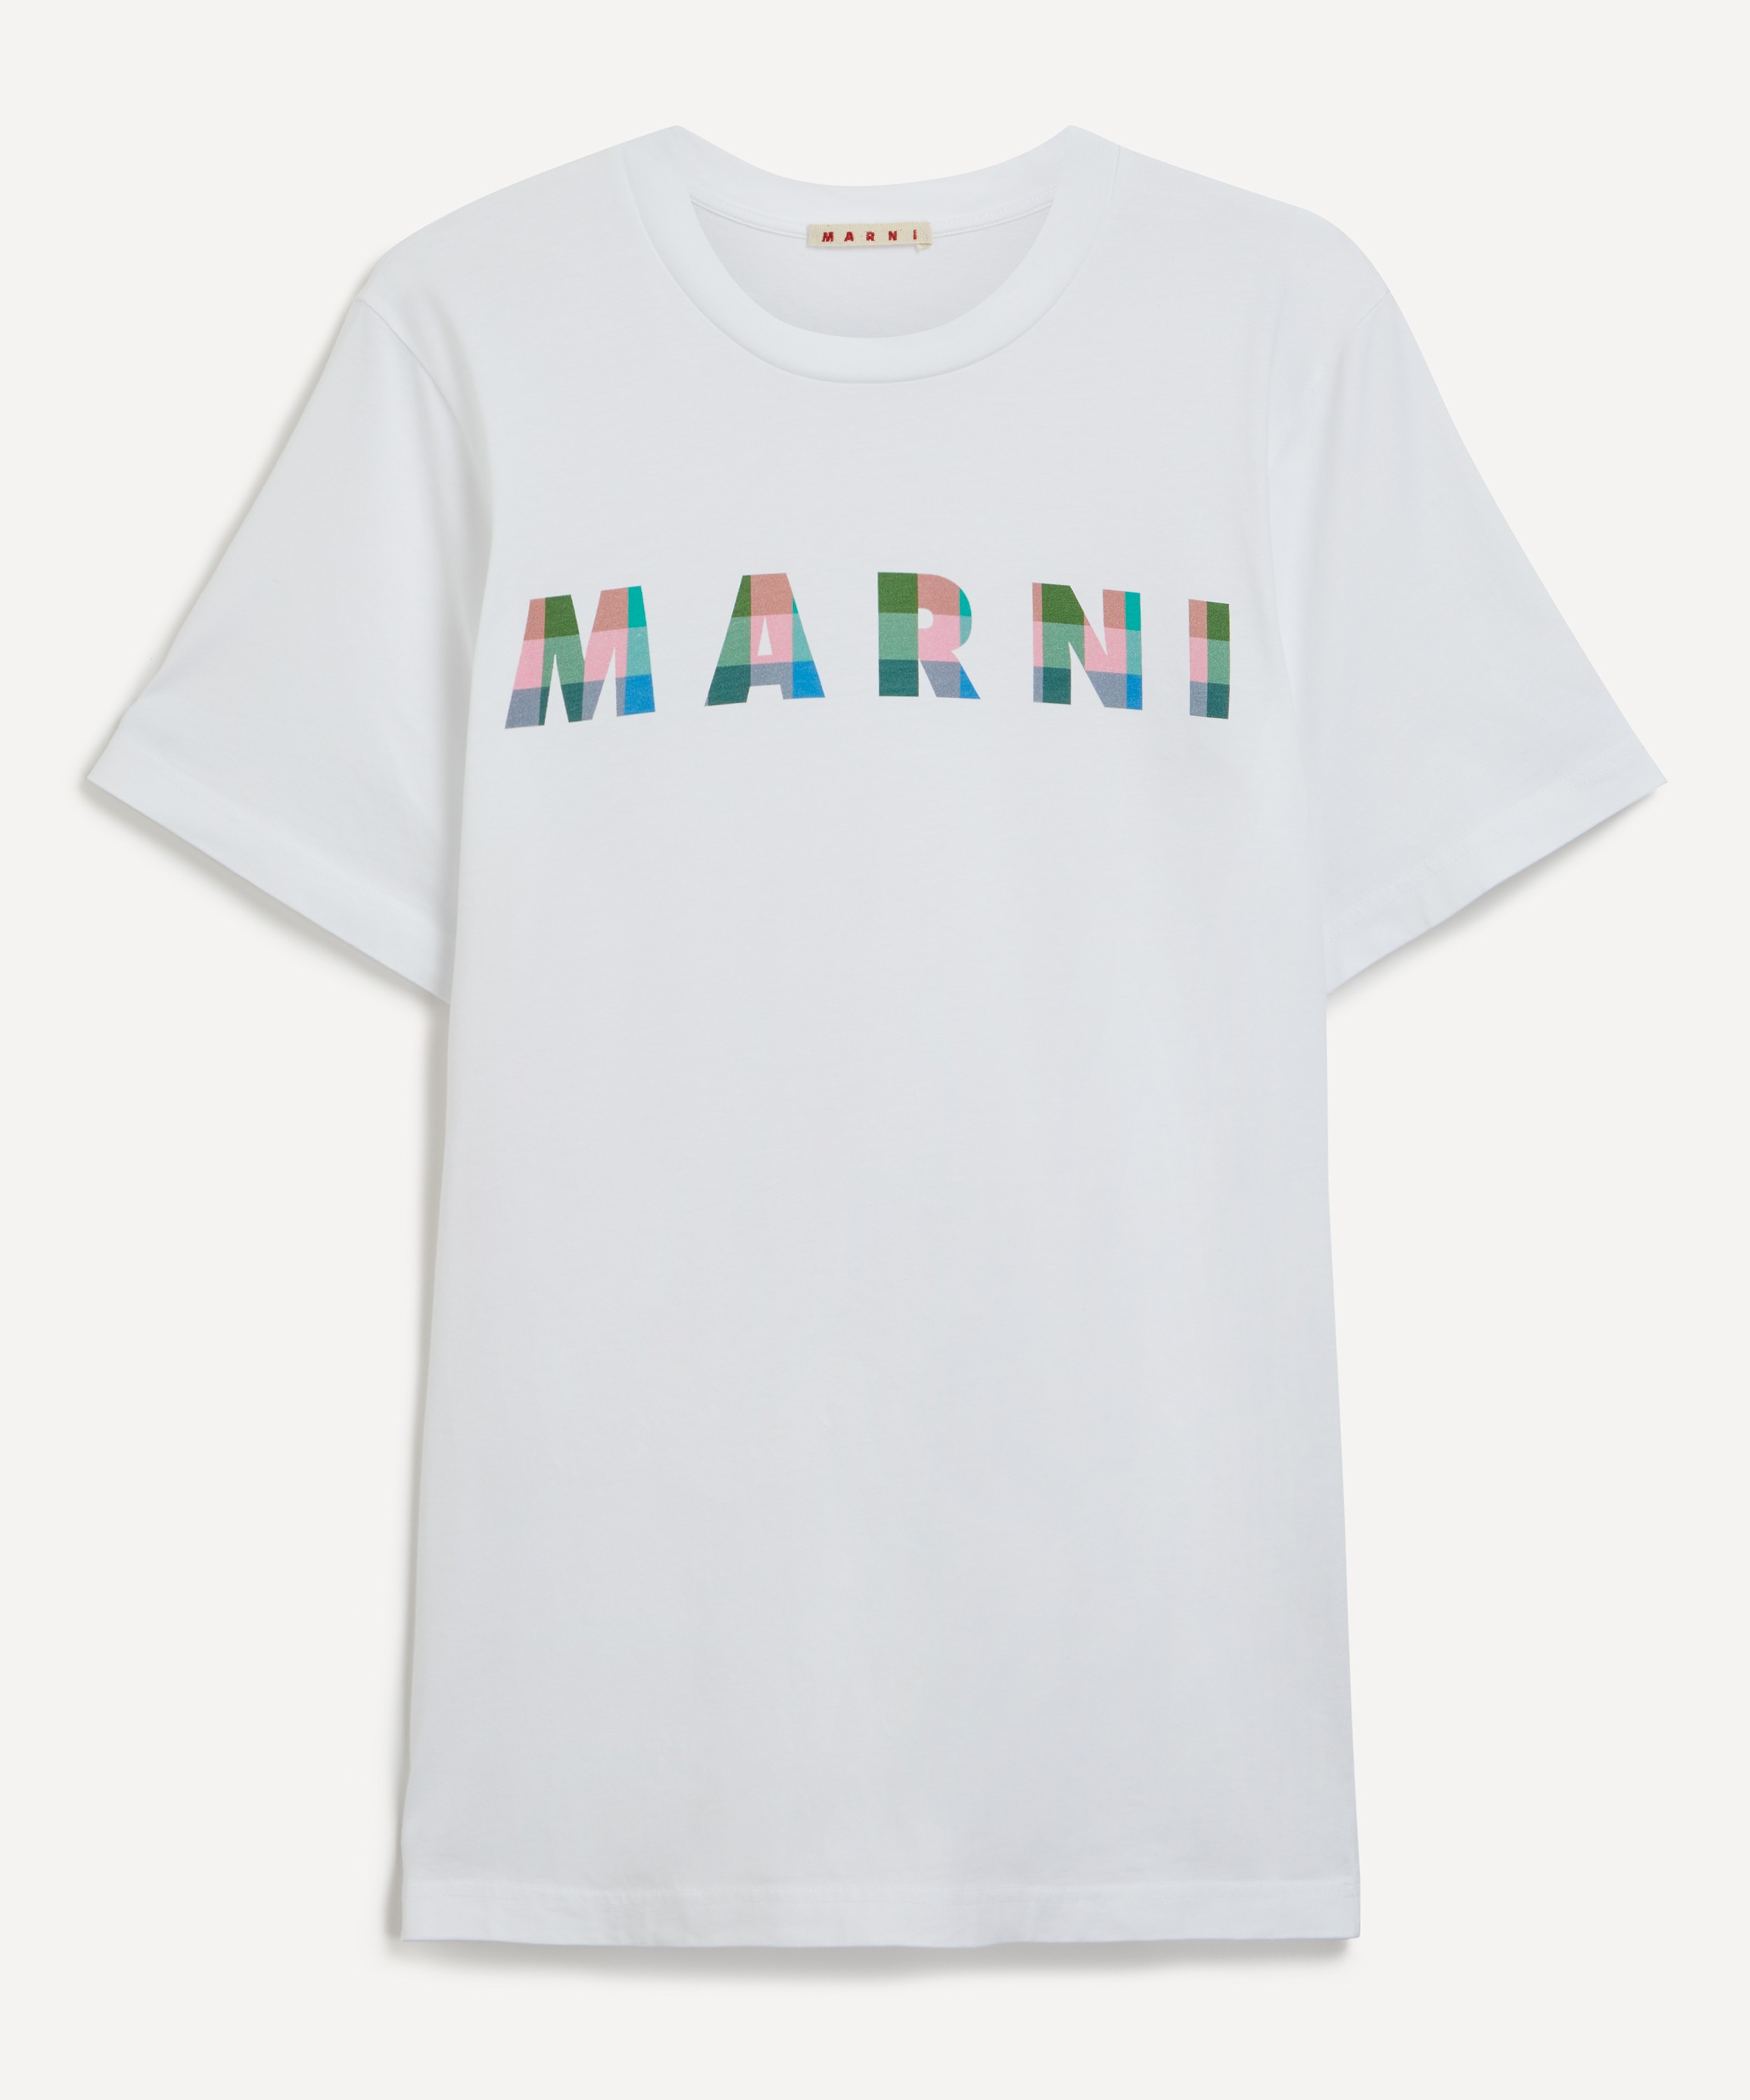 Marni - White Cotton Gingham Marni Logo T-Shirt